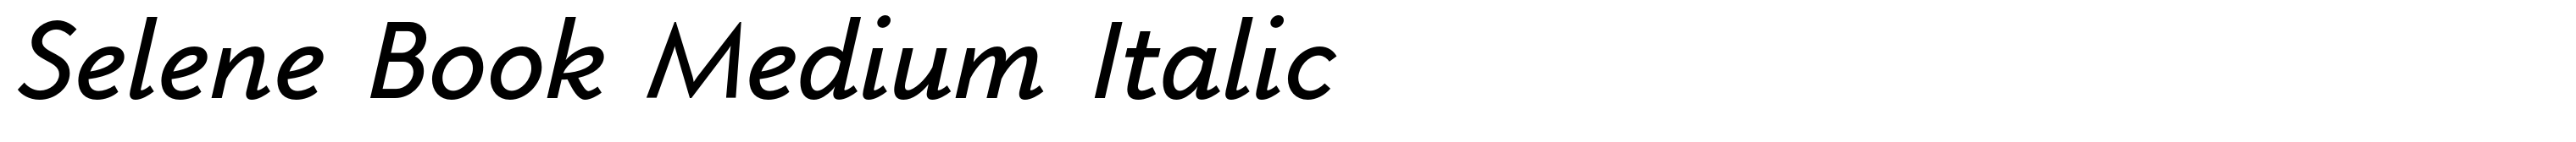 Selene Book Medium Italic